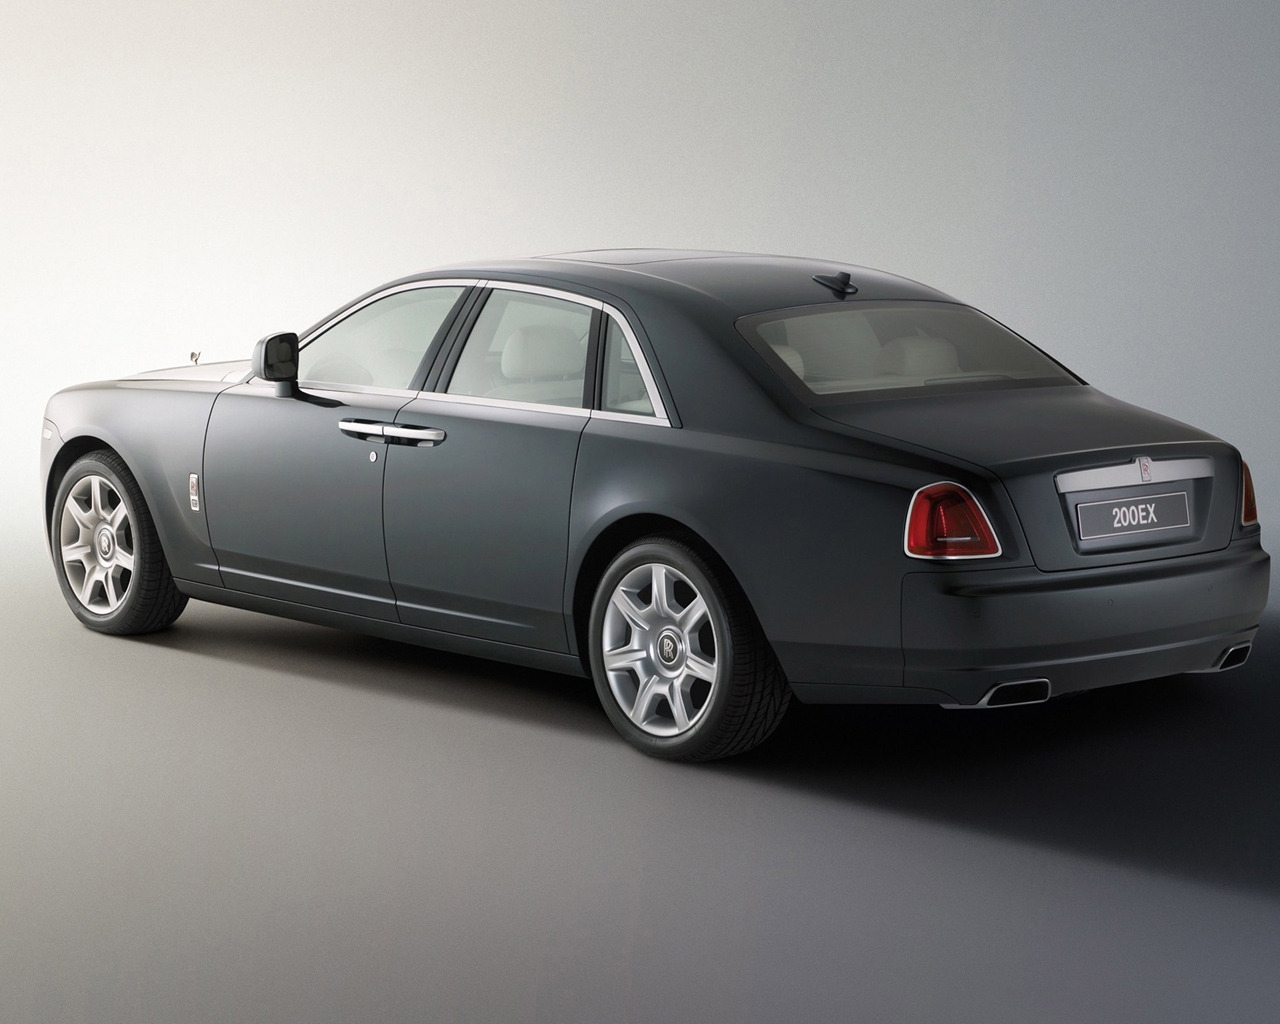 Rolls Royce 200EX for 1280 x 1024 resolution